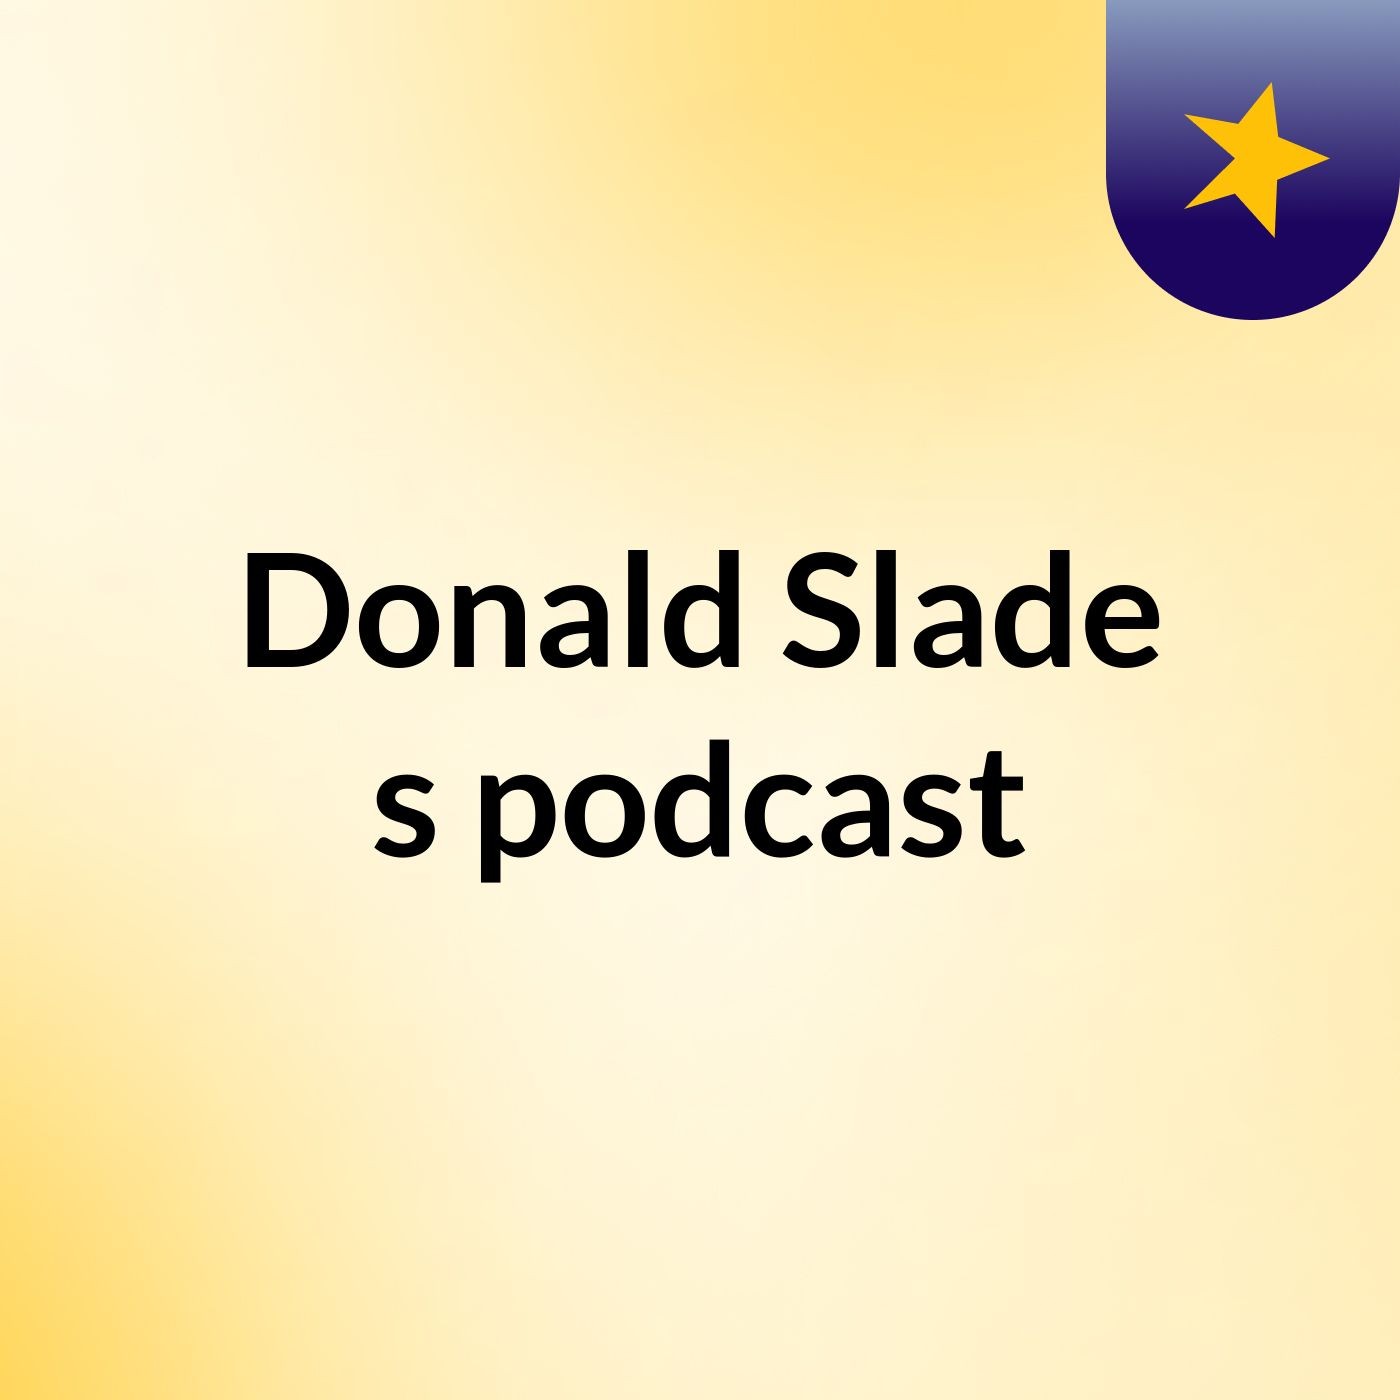 Donald Slade's podcast